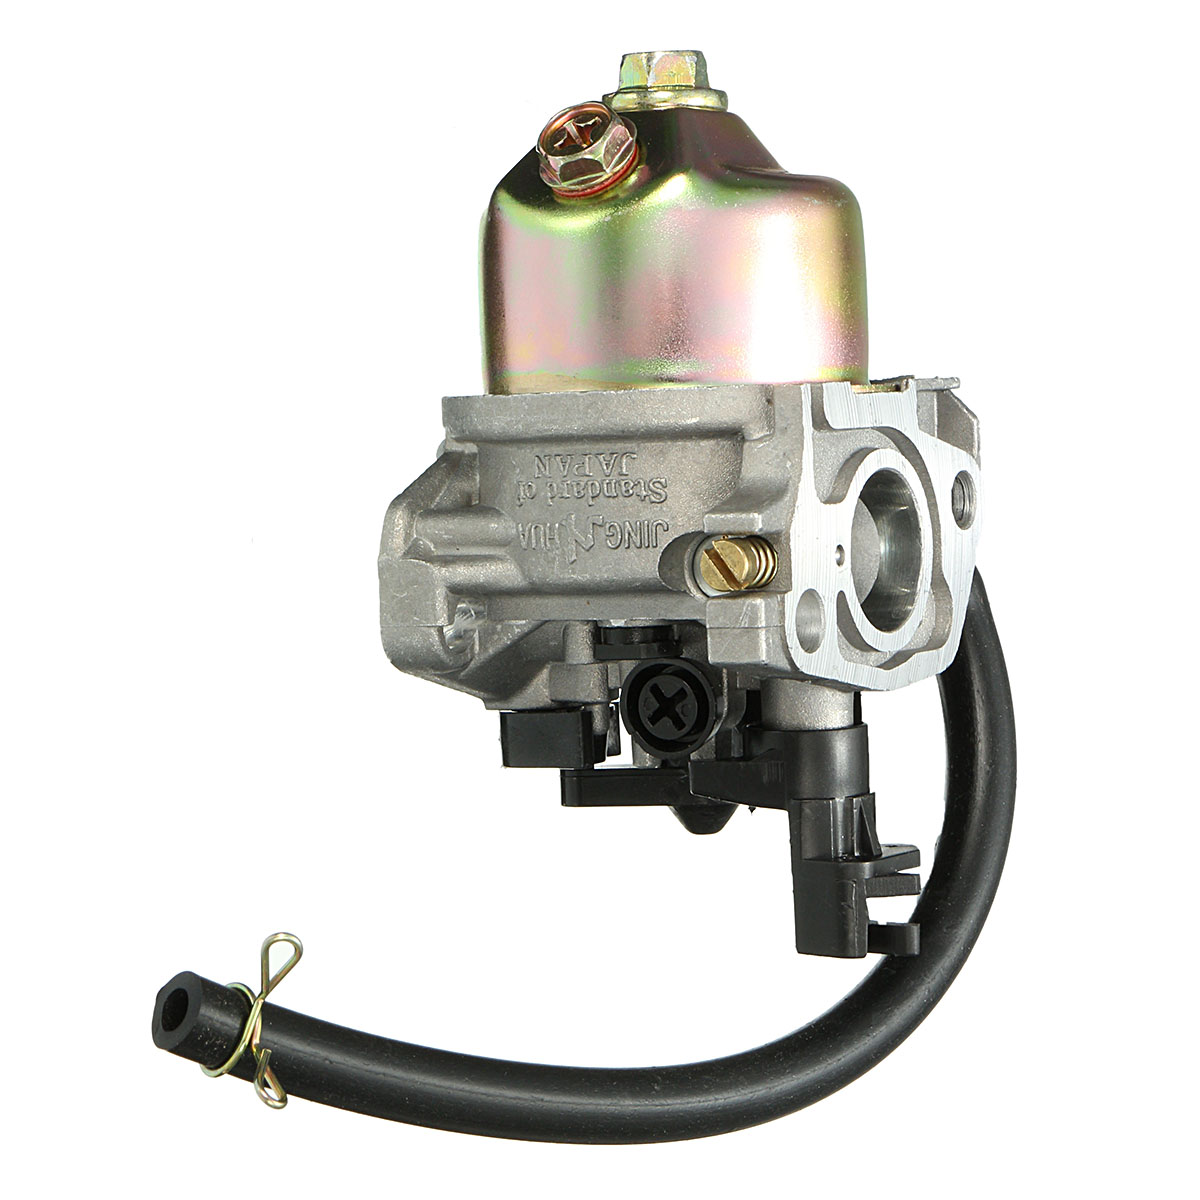 

Carburetor Carb For Honda GX160 GX200 5.5HP 6.5HP Generator Engine